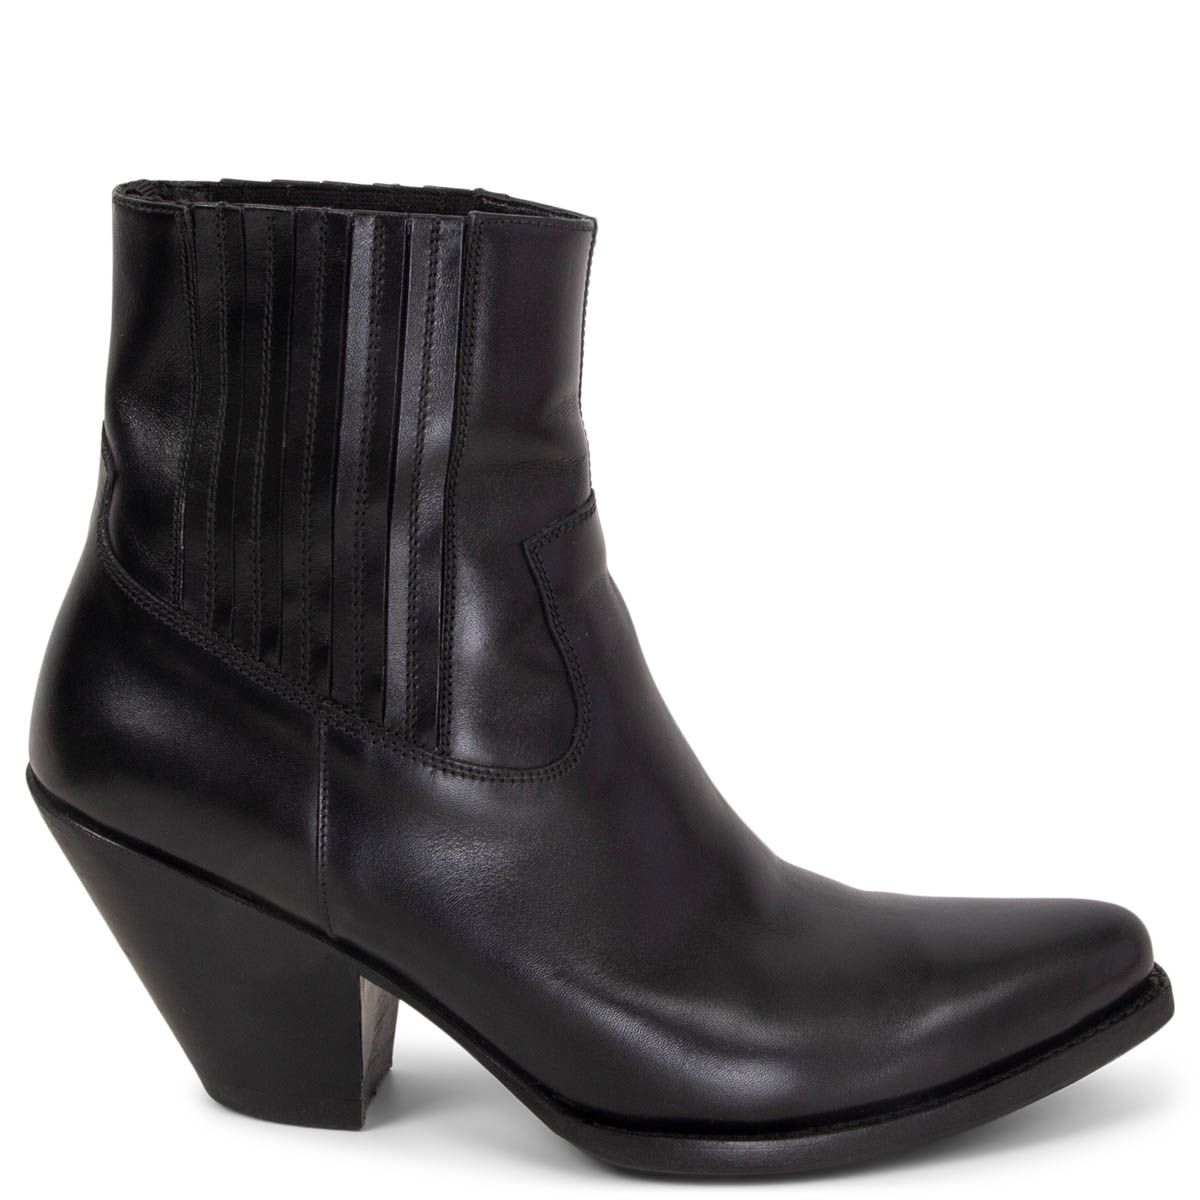 Celine Berlin 80 Boots Black Leather